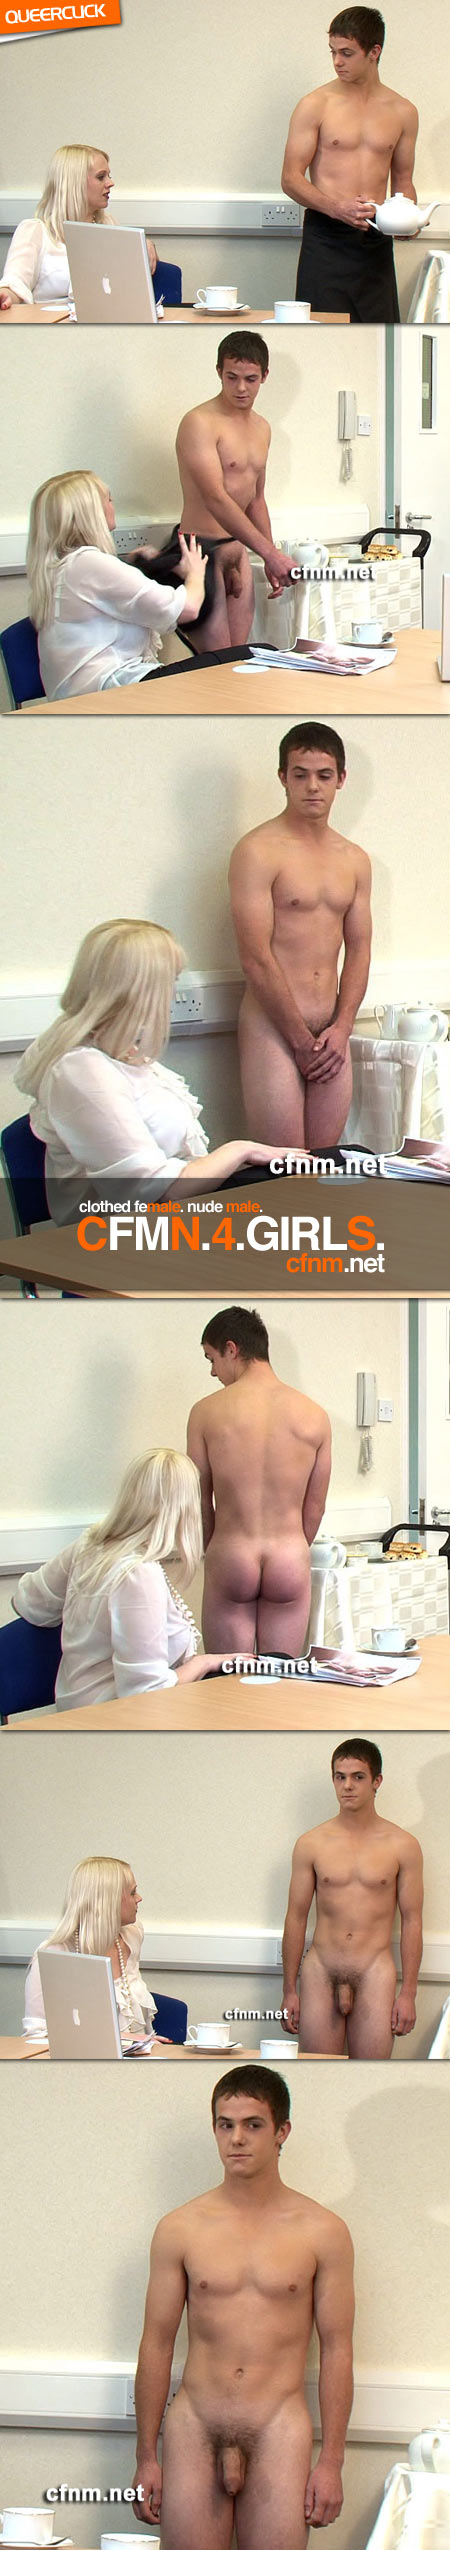 CFNM.net: CFNM 4 Girls